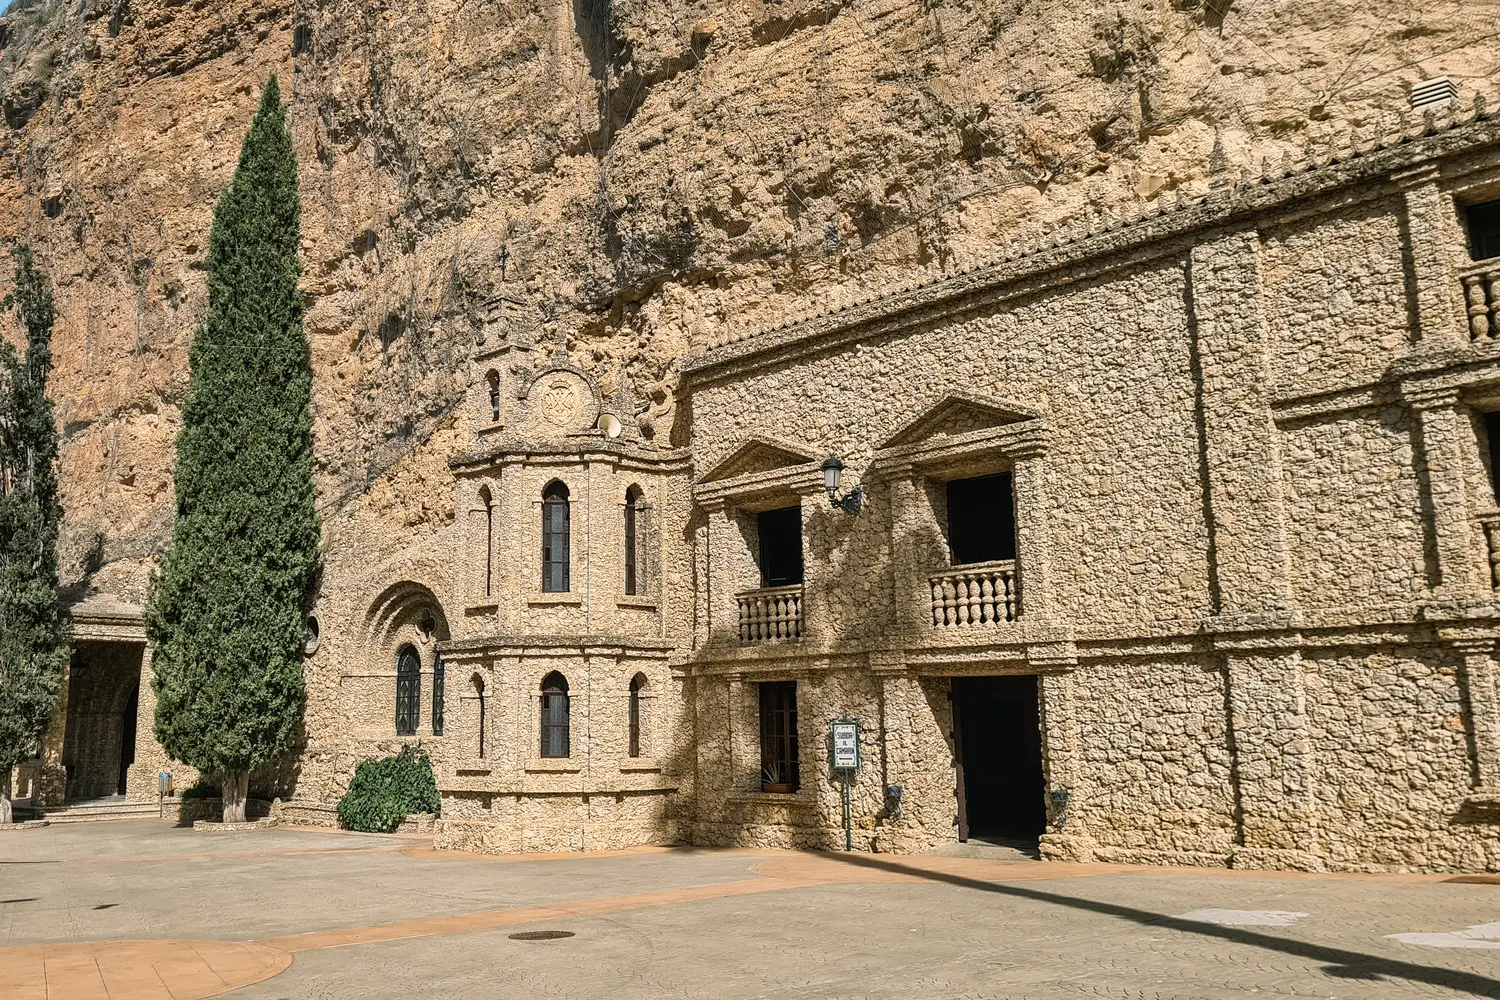 Church built into the limestone wall at Santuario Nuestra Señora de la Esperanza, one of the top things to do in Murcia Spain.